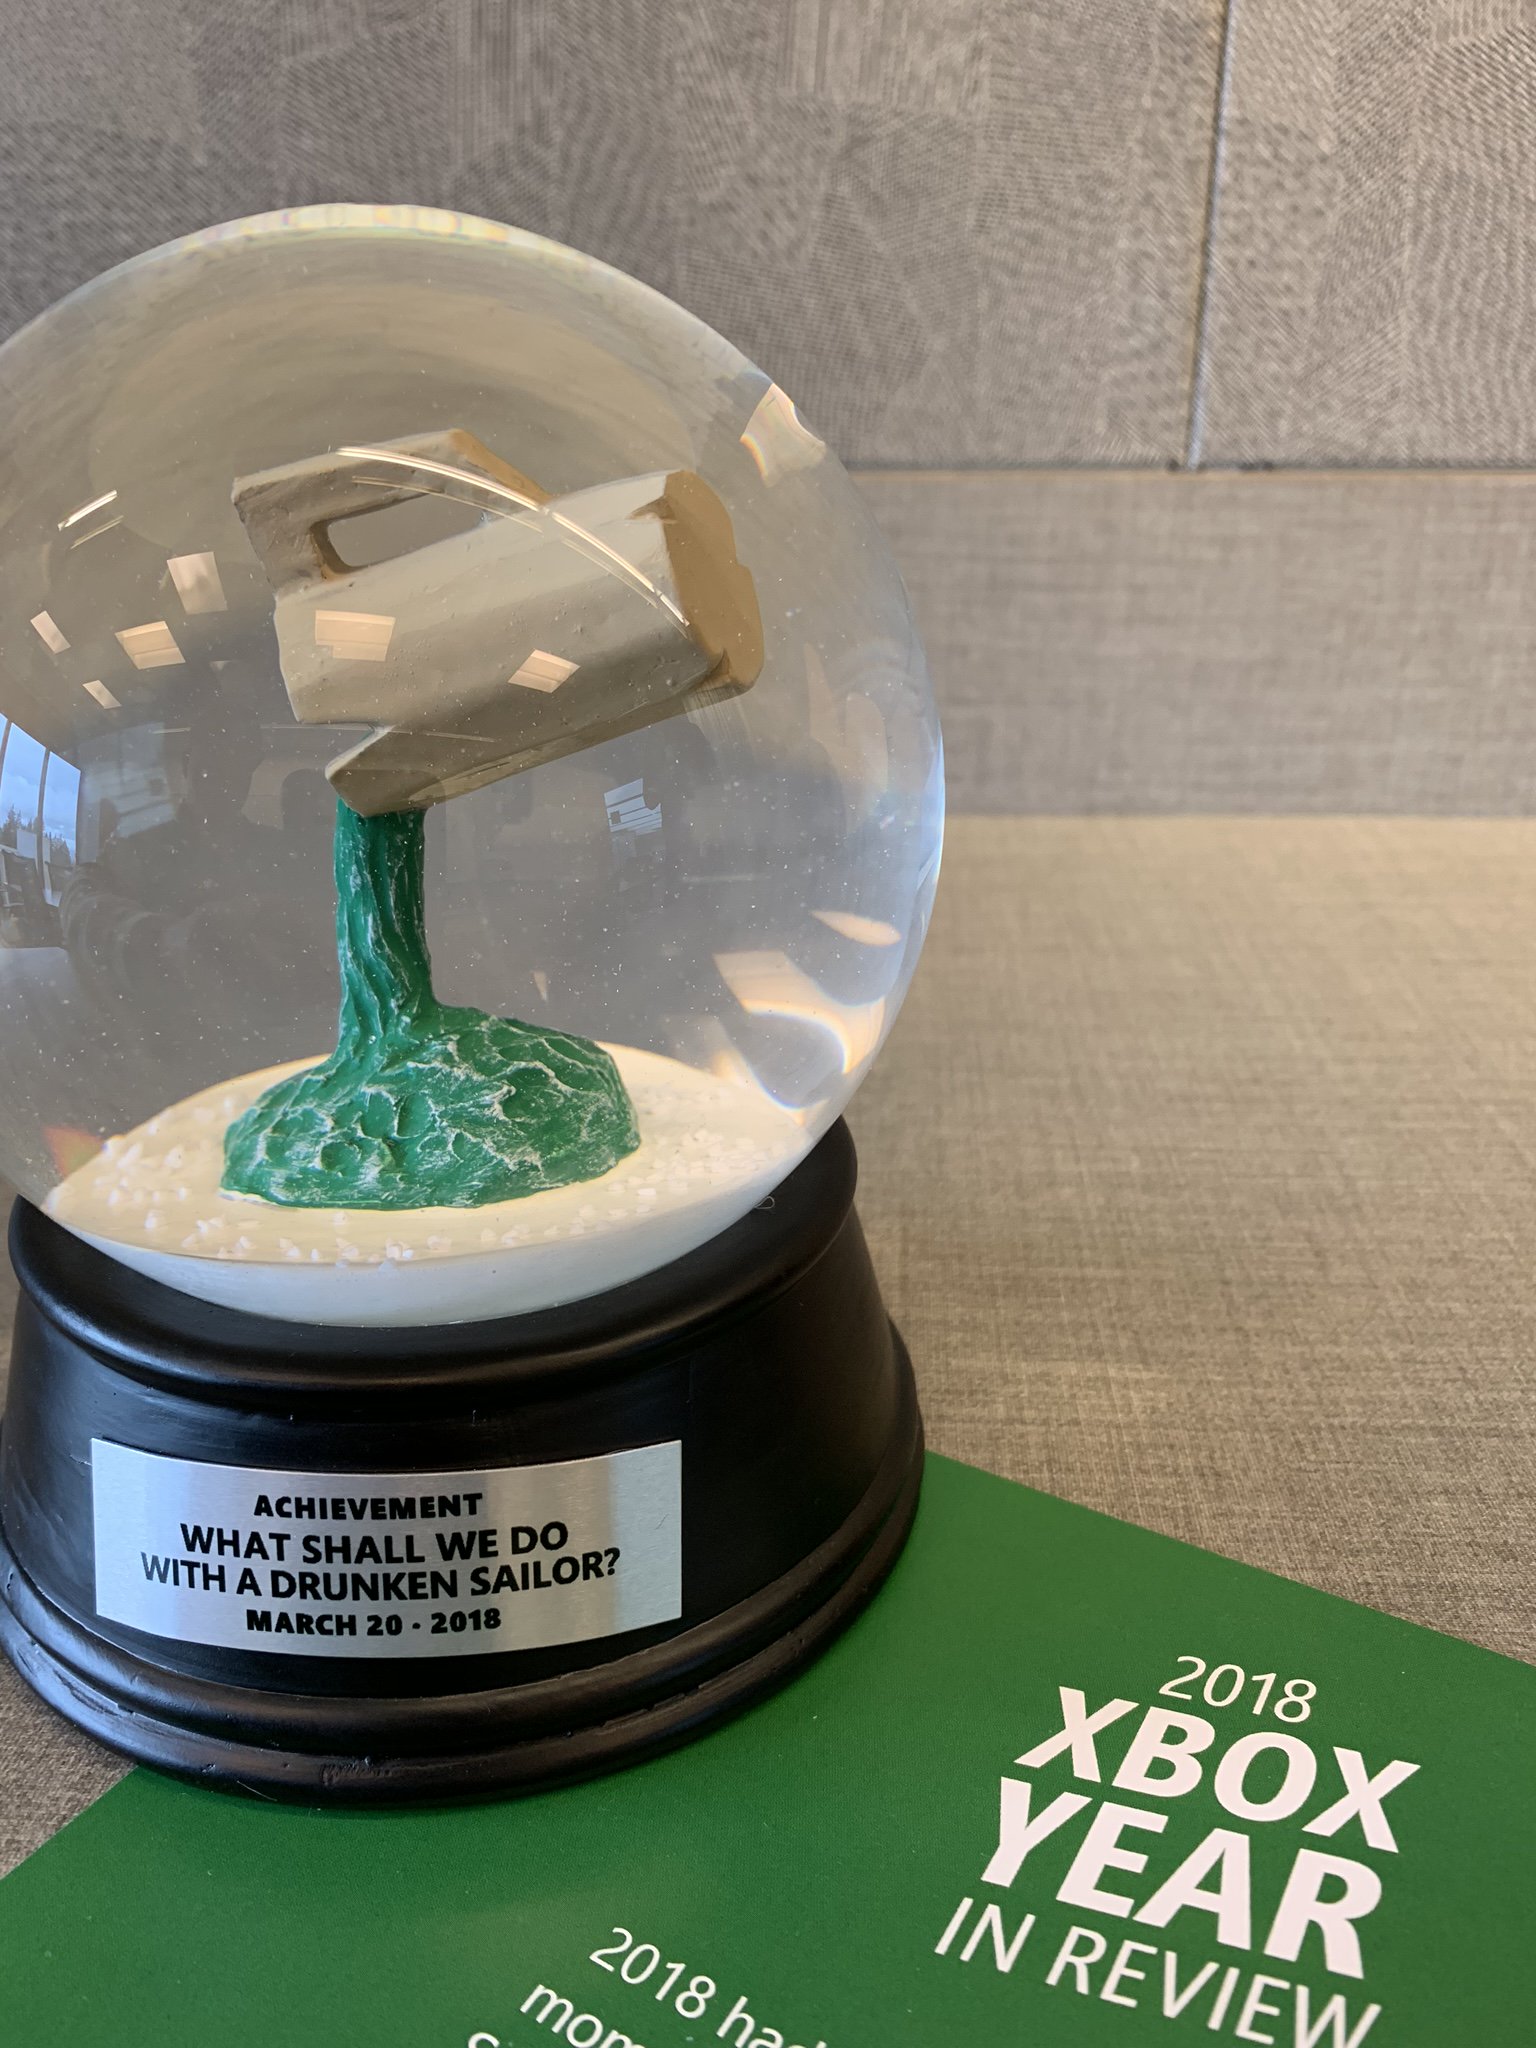 Gewaad letterlijk Okkernoot Larry Hryb 💫✨ on Twitter: "The 2018 Xbox Year In Review snow globe that  appeared on my desk today. ❄ ⛄🎄 enjoy the fine camera work of  @jeffrubenstein 😍 https://t.co/5mYXpLrRij" / Twitter